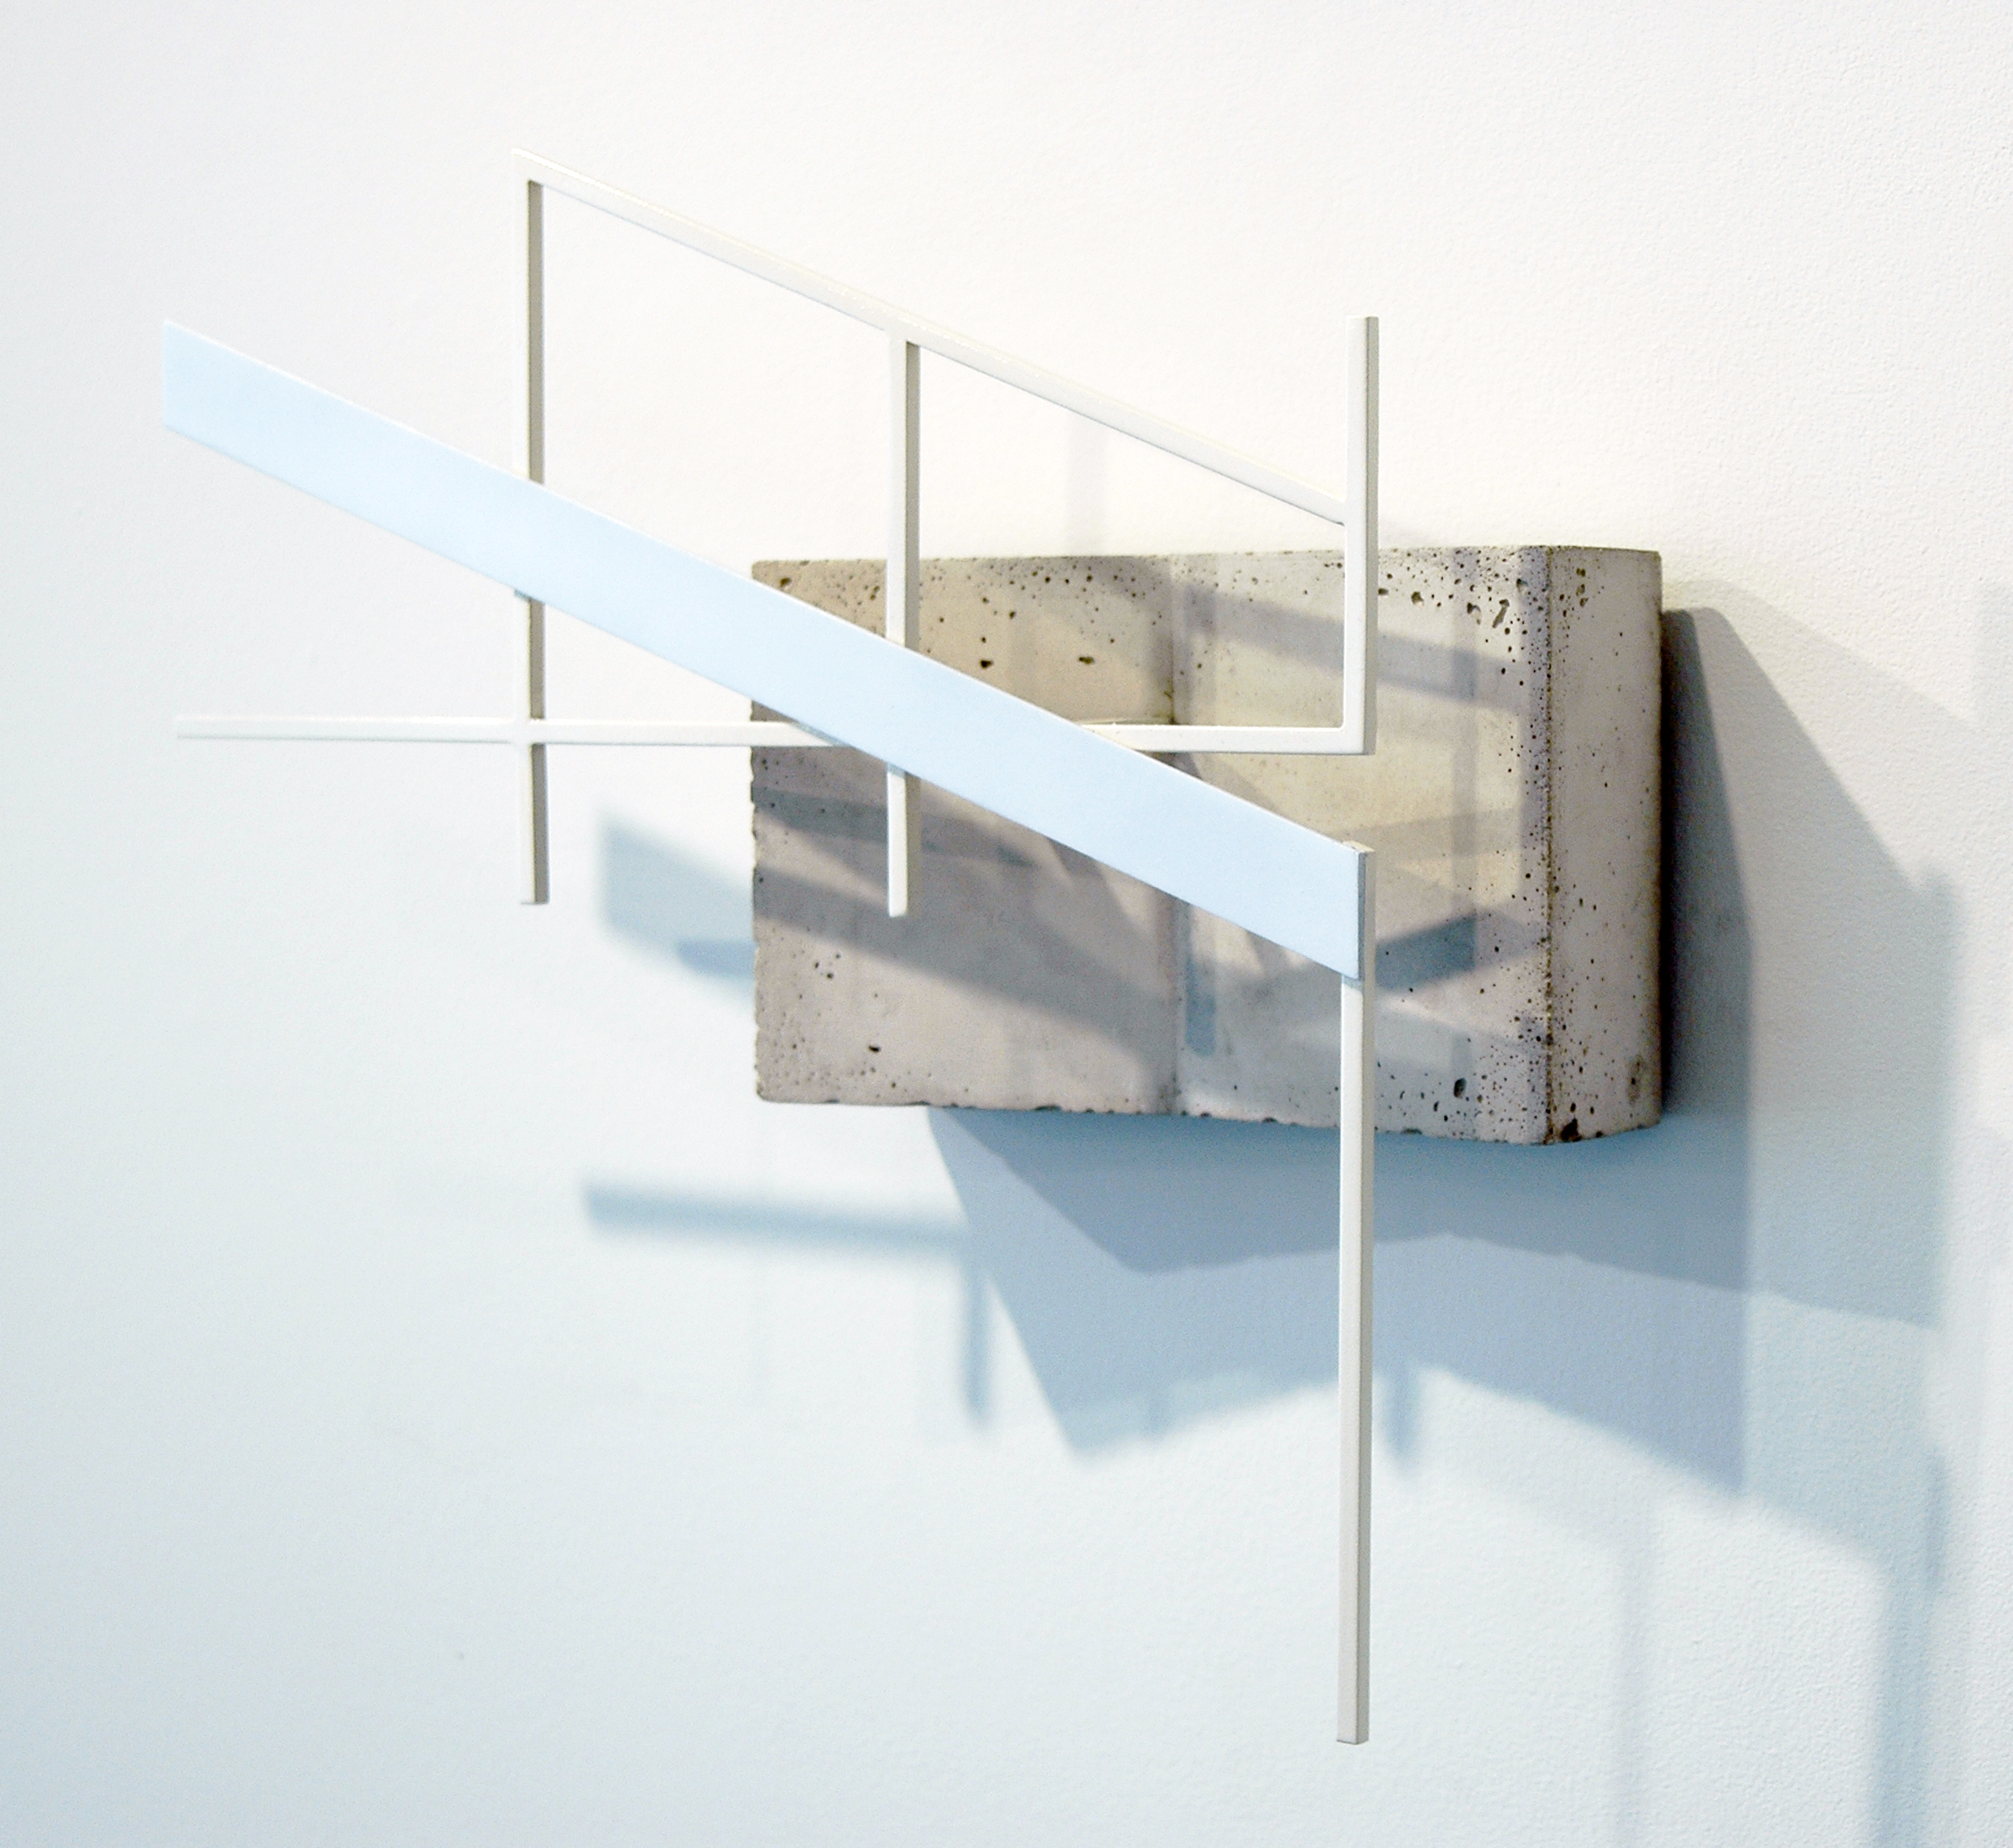   JONATHAN RUNCIO  (side view)&nbsp; Untitled , concrete, steel and enamel, 15.75" x 17.25" x 4.25", 2013 